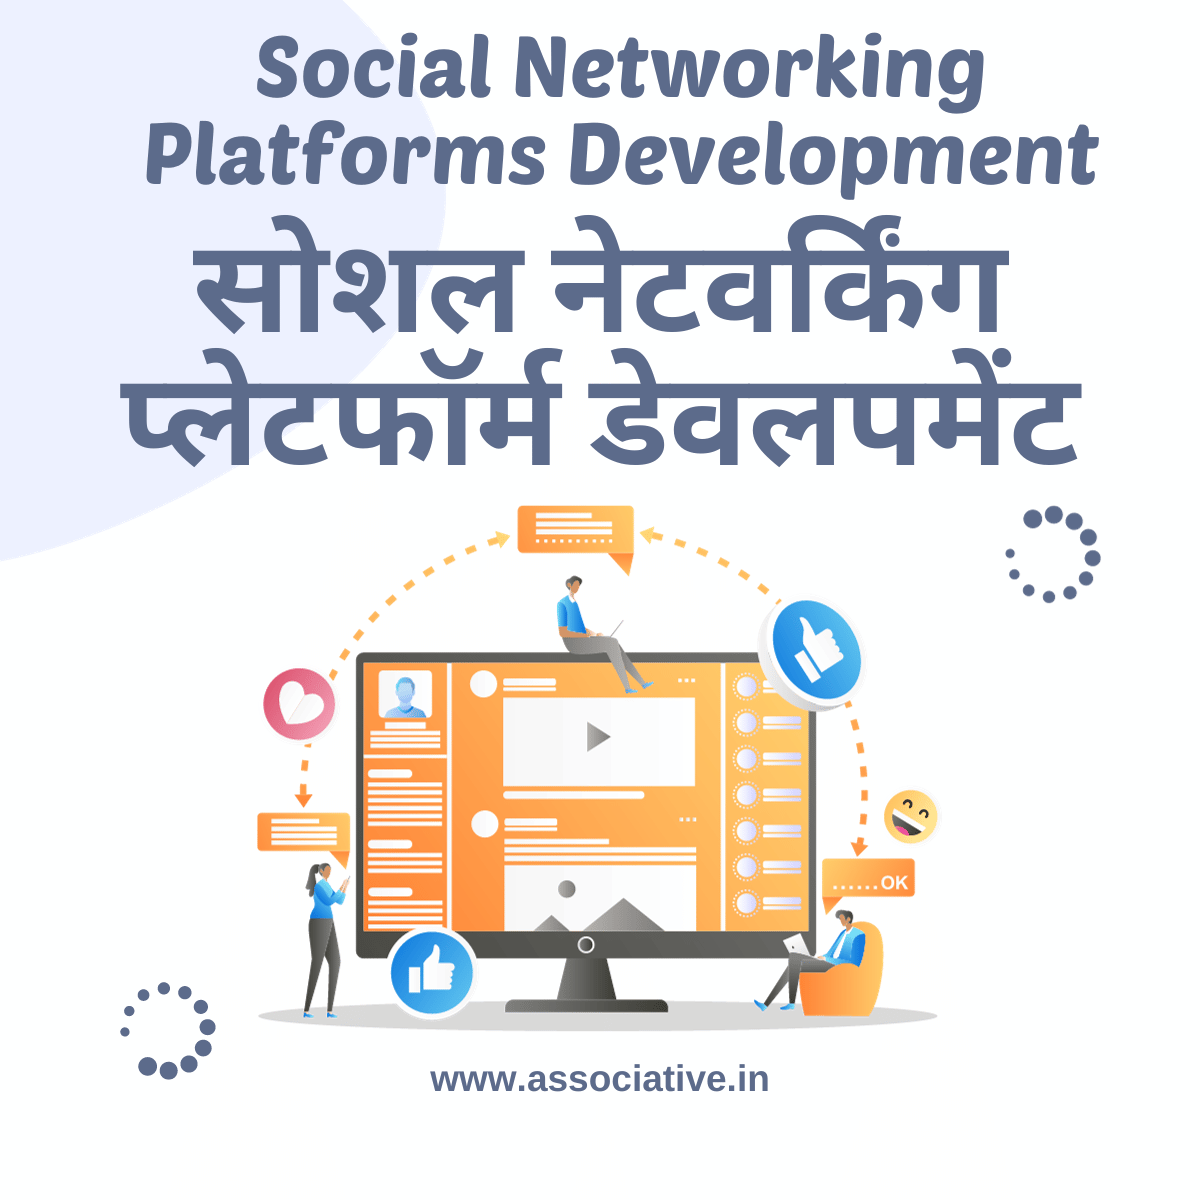 Social Networking Platforms Development सोशल नेटवर्किंग प्लेटफॉर्म डेवलपमेंट